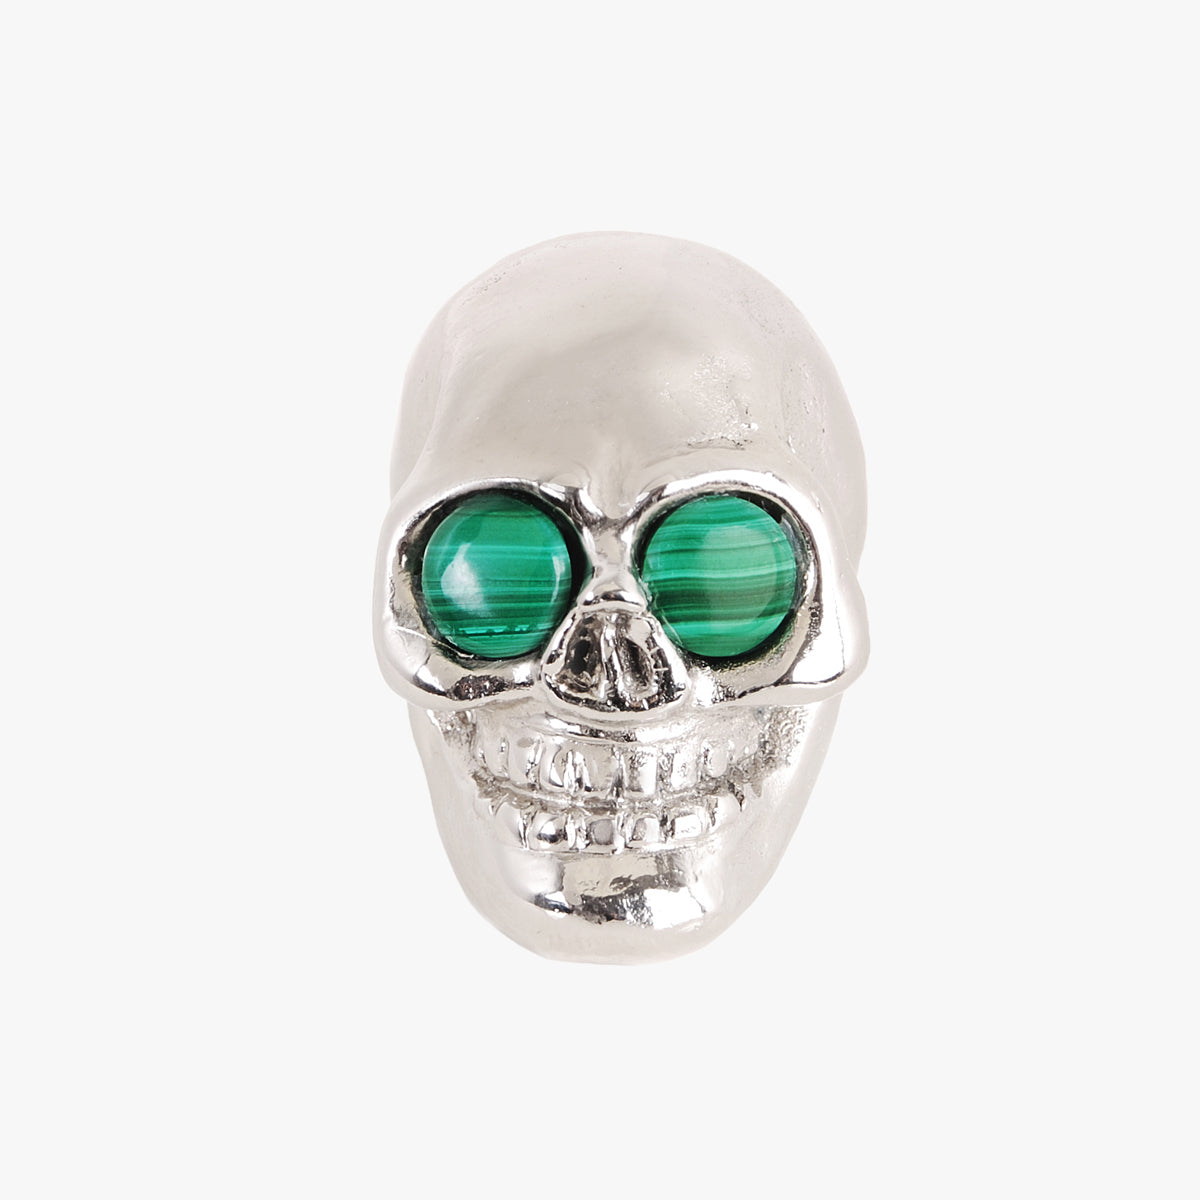 Skull knob handmade with malachite stone and polished chrome by Matthew Studios